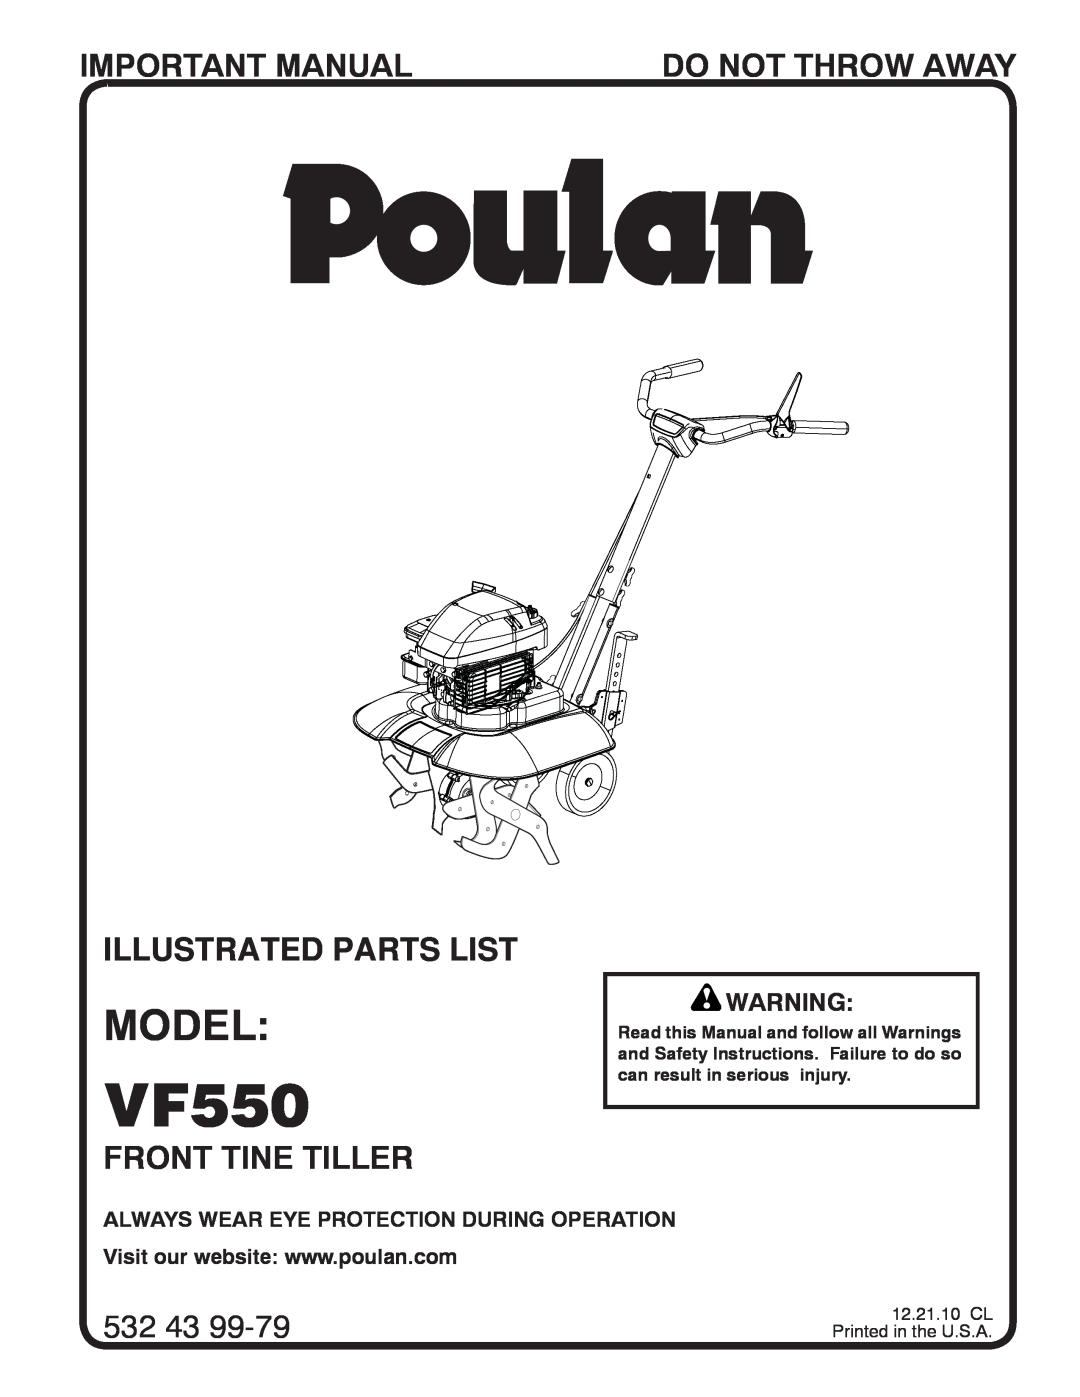 Poulan 96082001500, 433552 manual Model, VF550, Important Manual, Do Not Throw Away, Operators Manual, Front Tine Tiller 